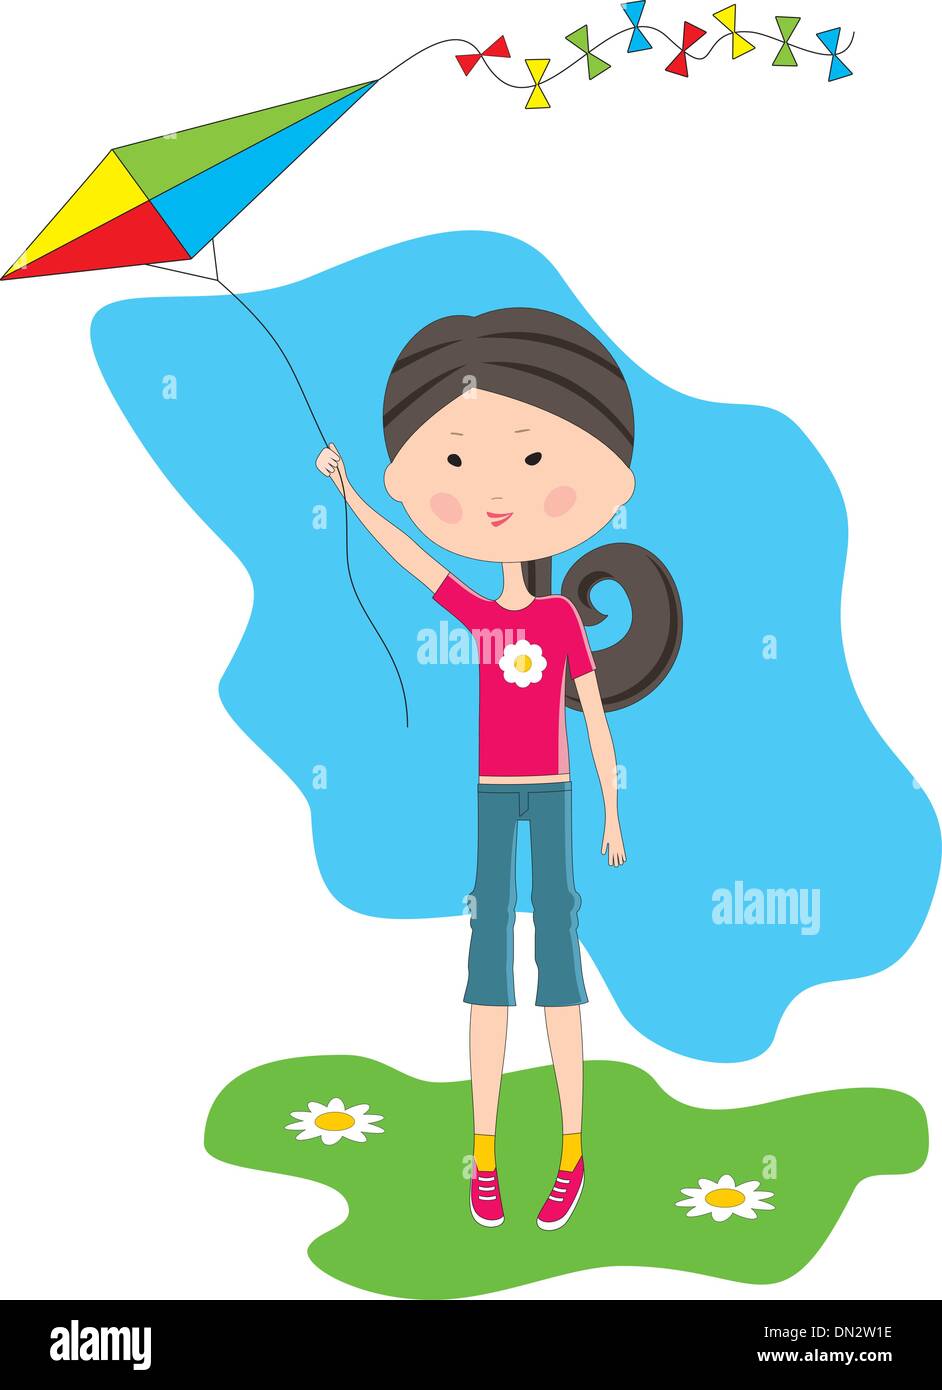 Le Cartoon girl with a kite Illustration de Vecteur